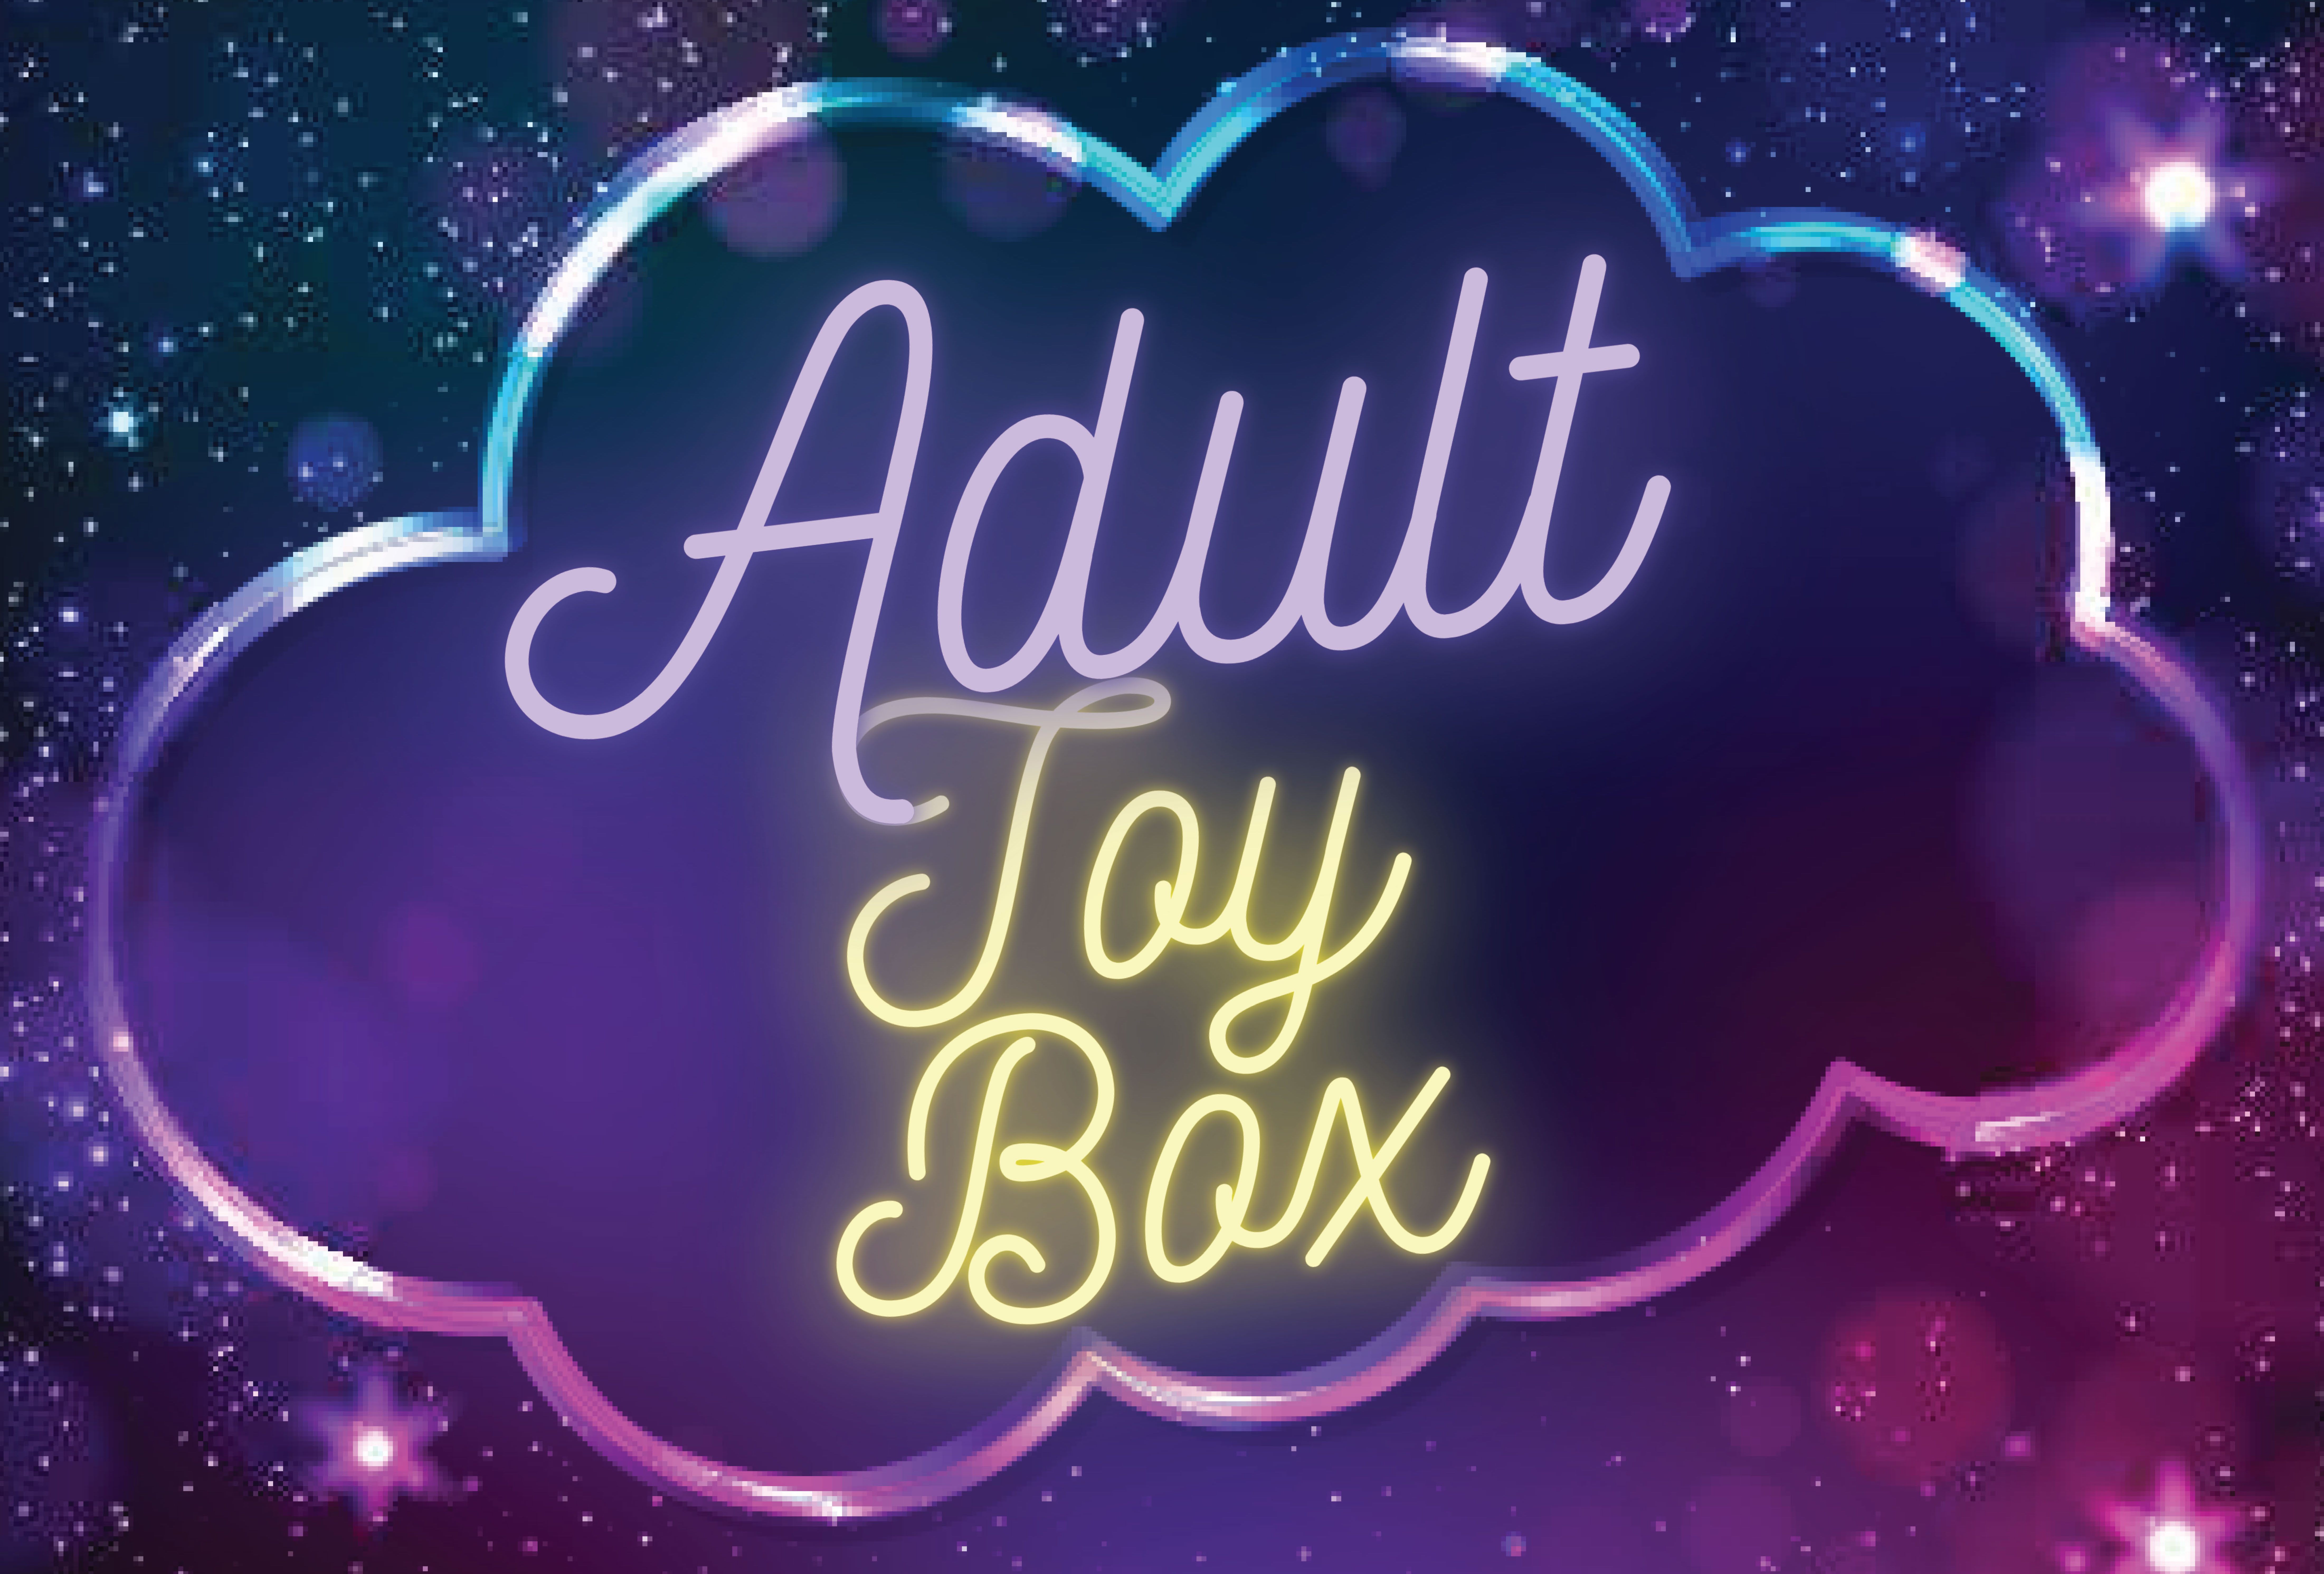 Adult Toy Box